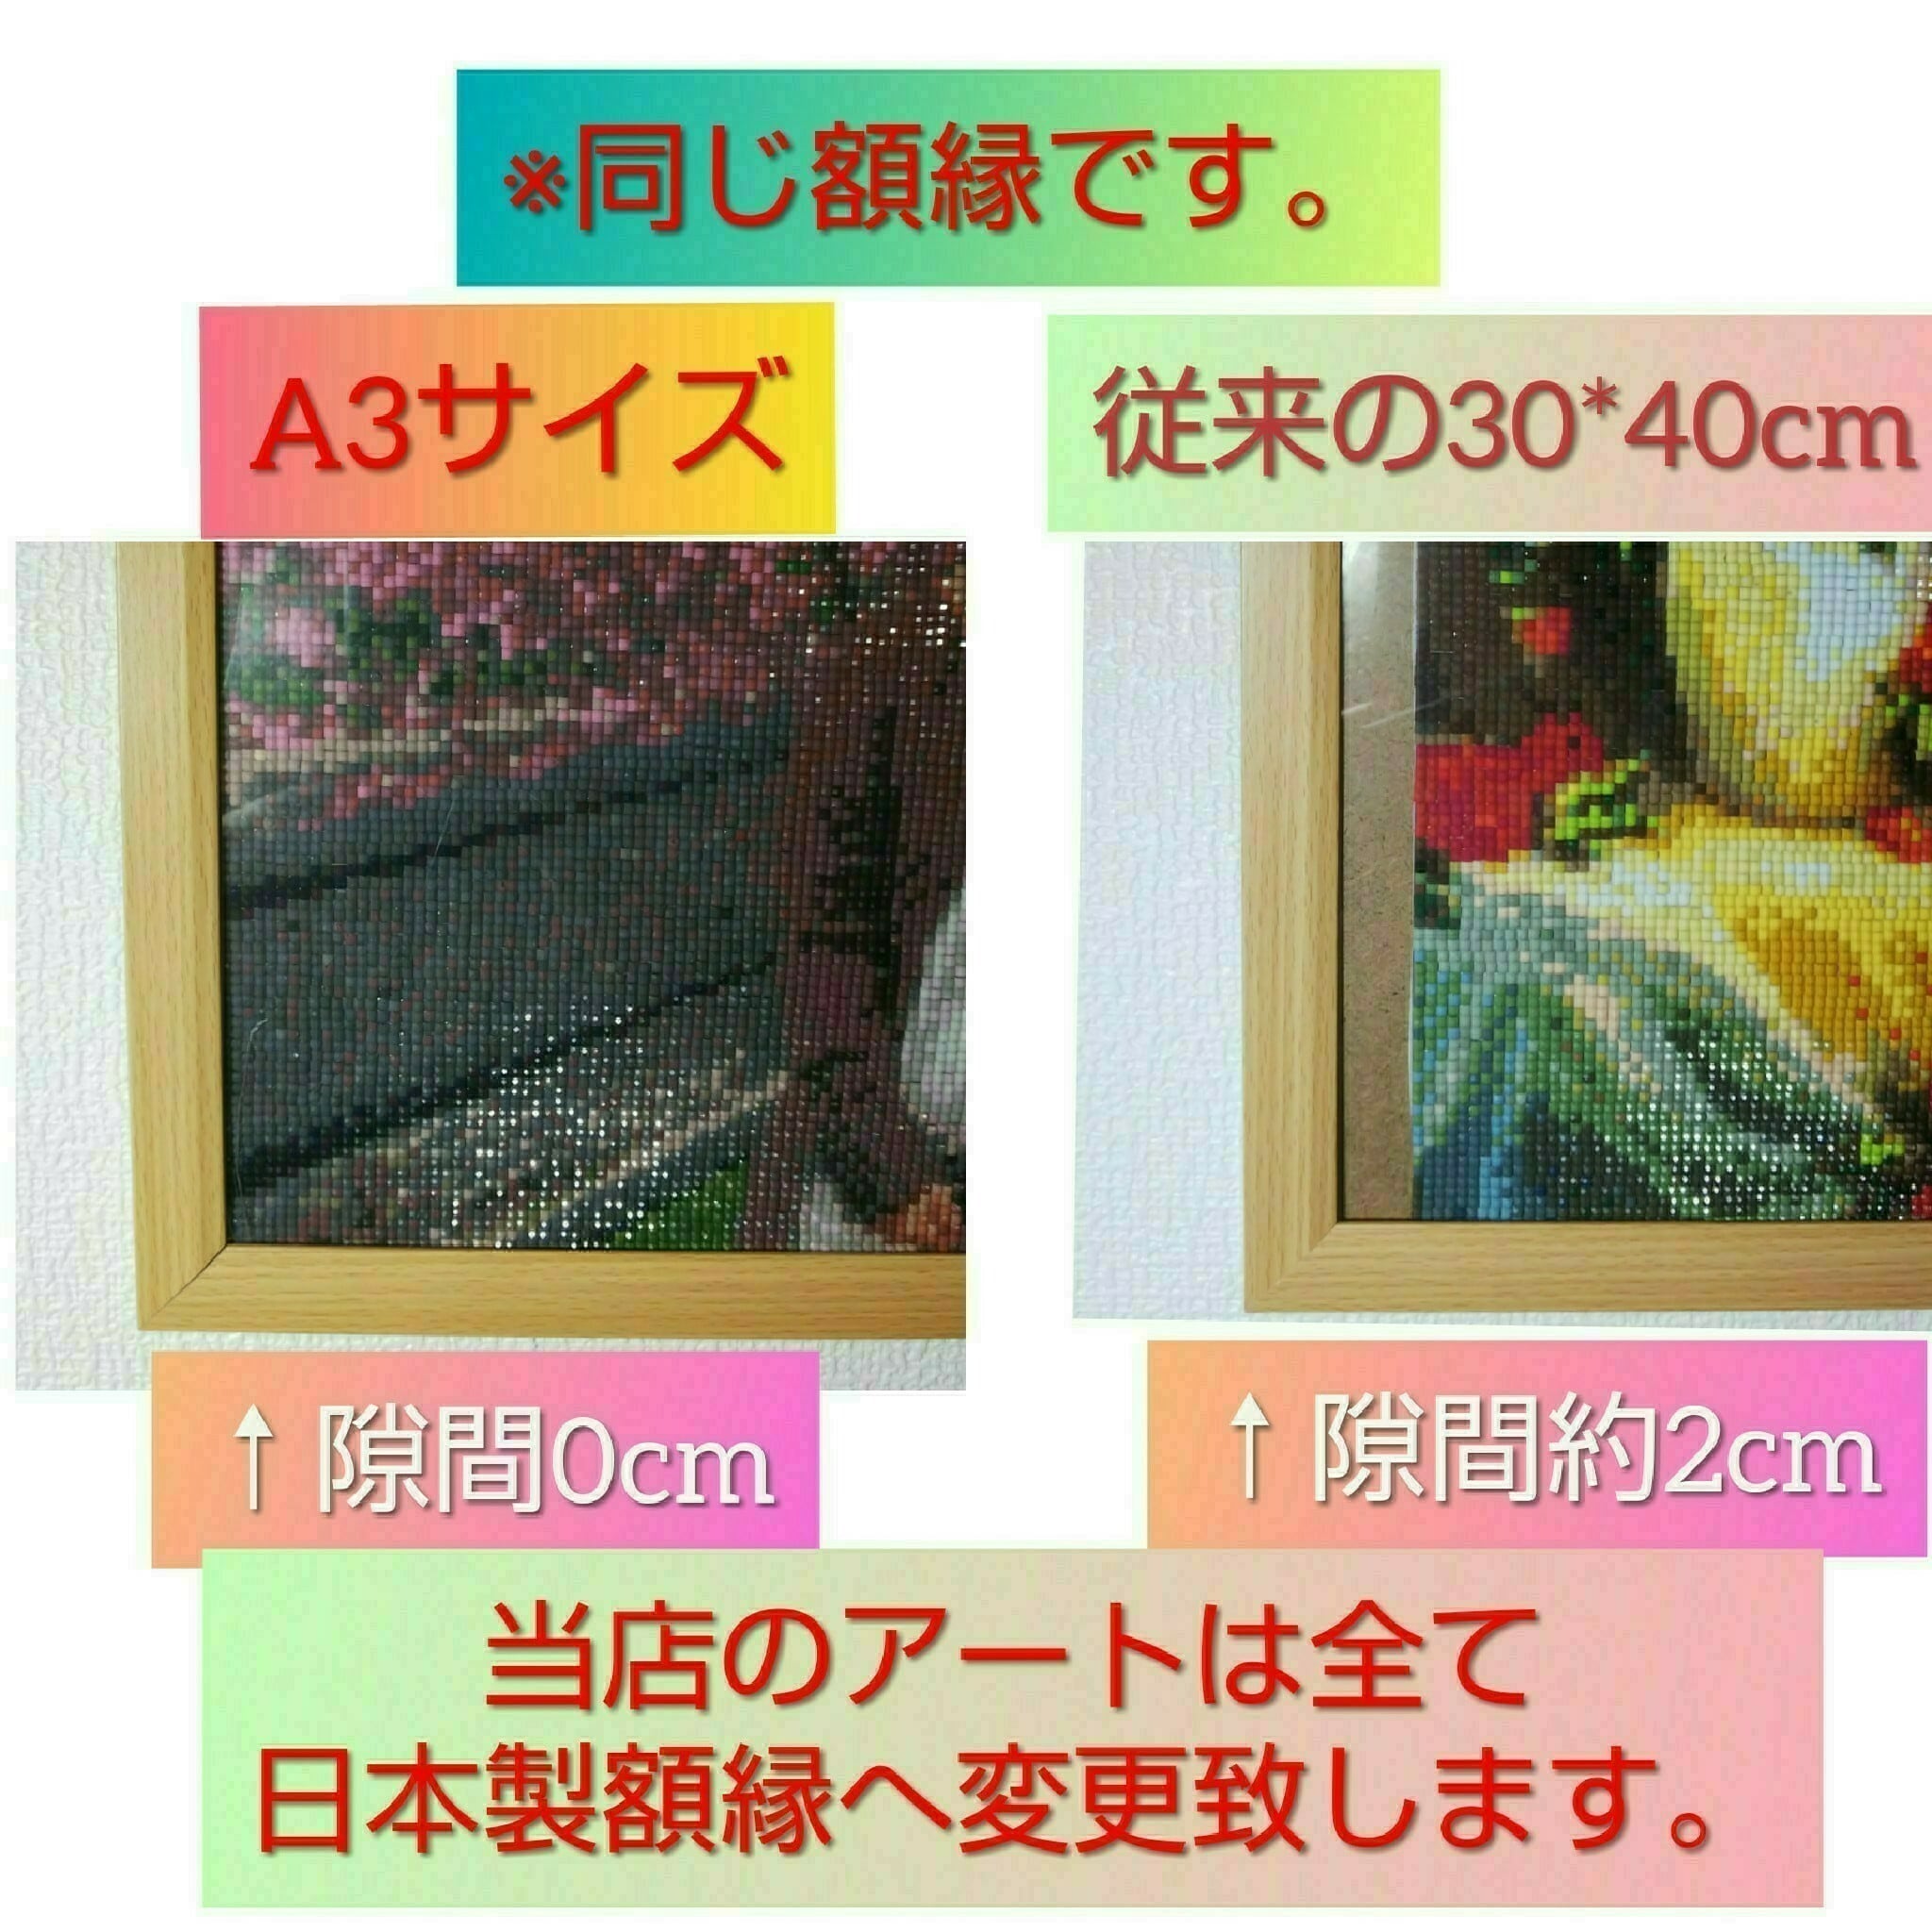 A1サイズ 四角ビーズ【fan-010】フルダイヤモンドアート